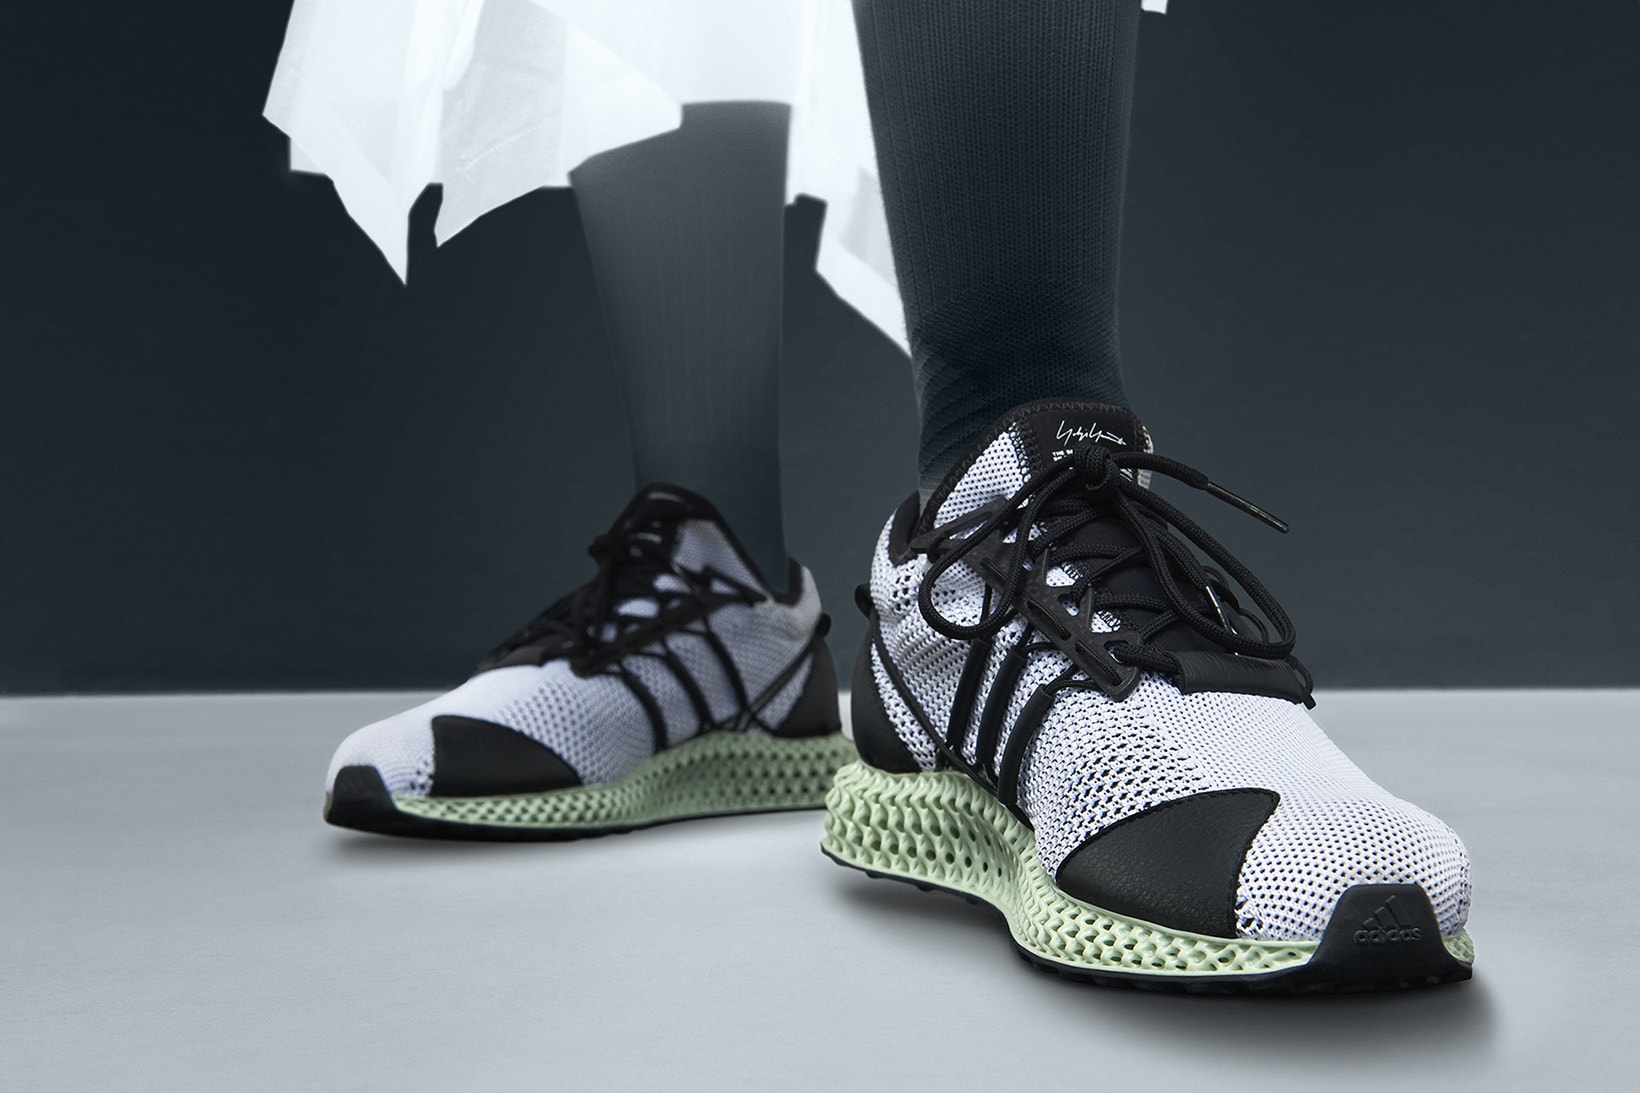 Y3 RUNNER 4D 2018 february 23 release date info sneakers shoes footwear futurecraft